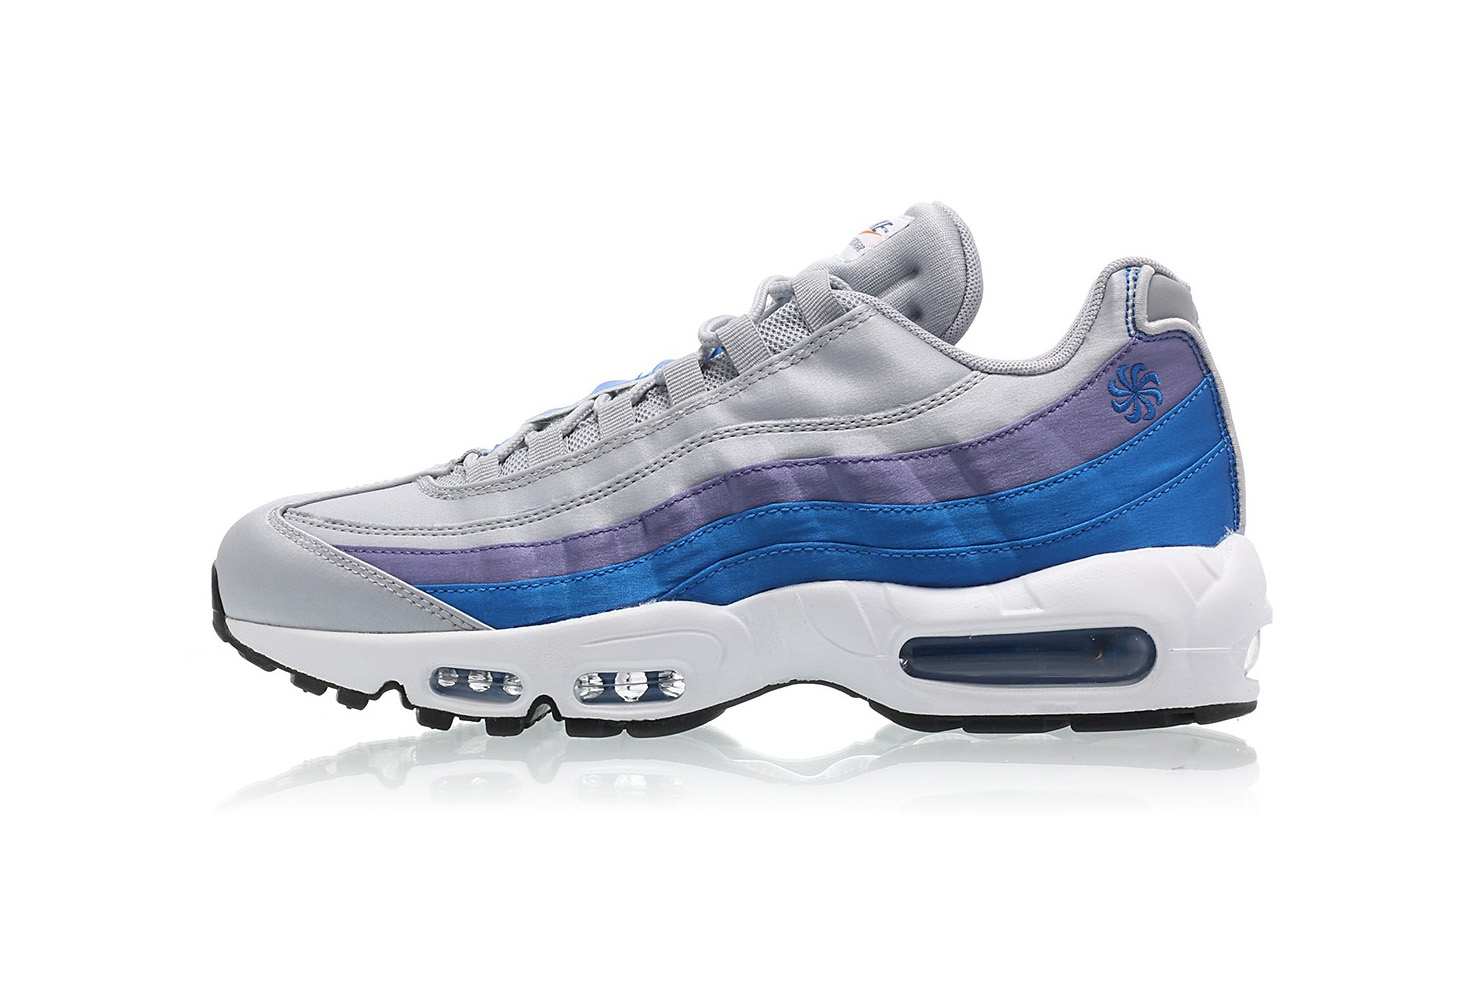 Nike Air Max 95 SE Pinwheel wolf grey blue nebula purple slate white may 2018 release date info drop sneakers shoes footwear titolo